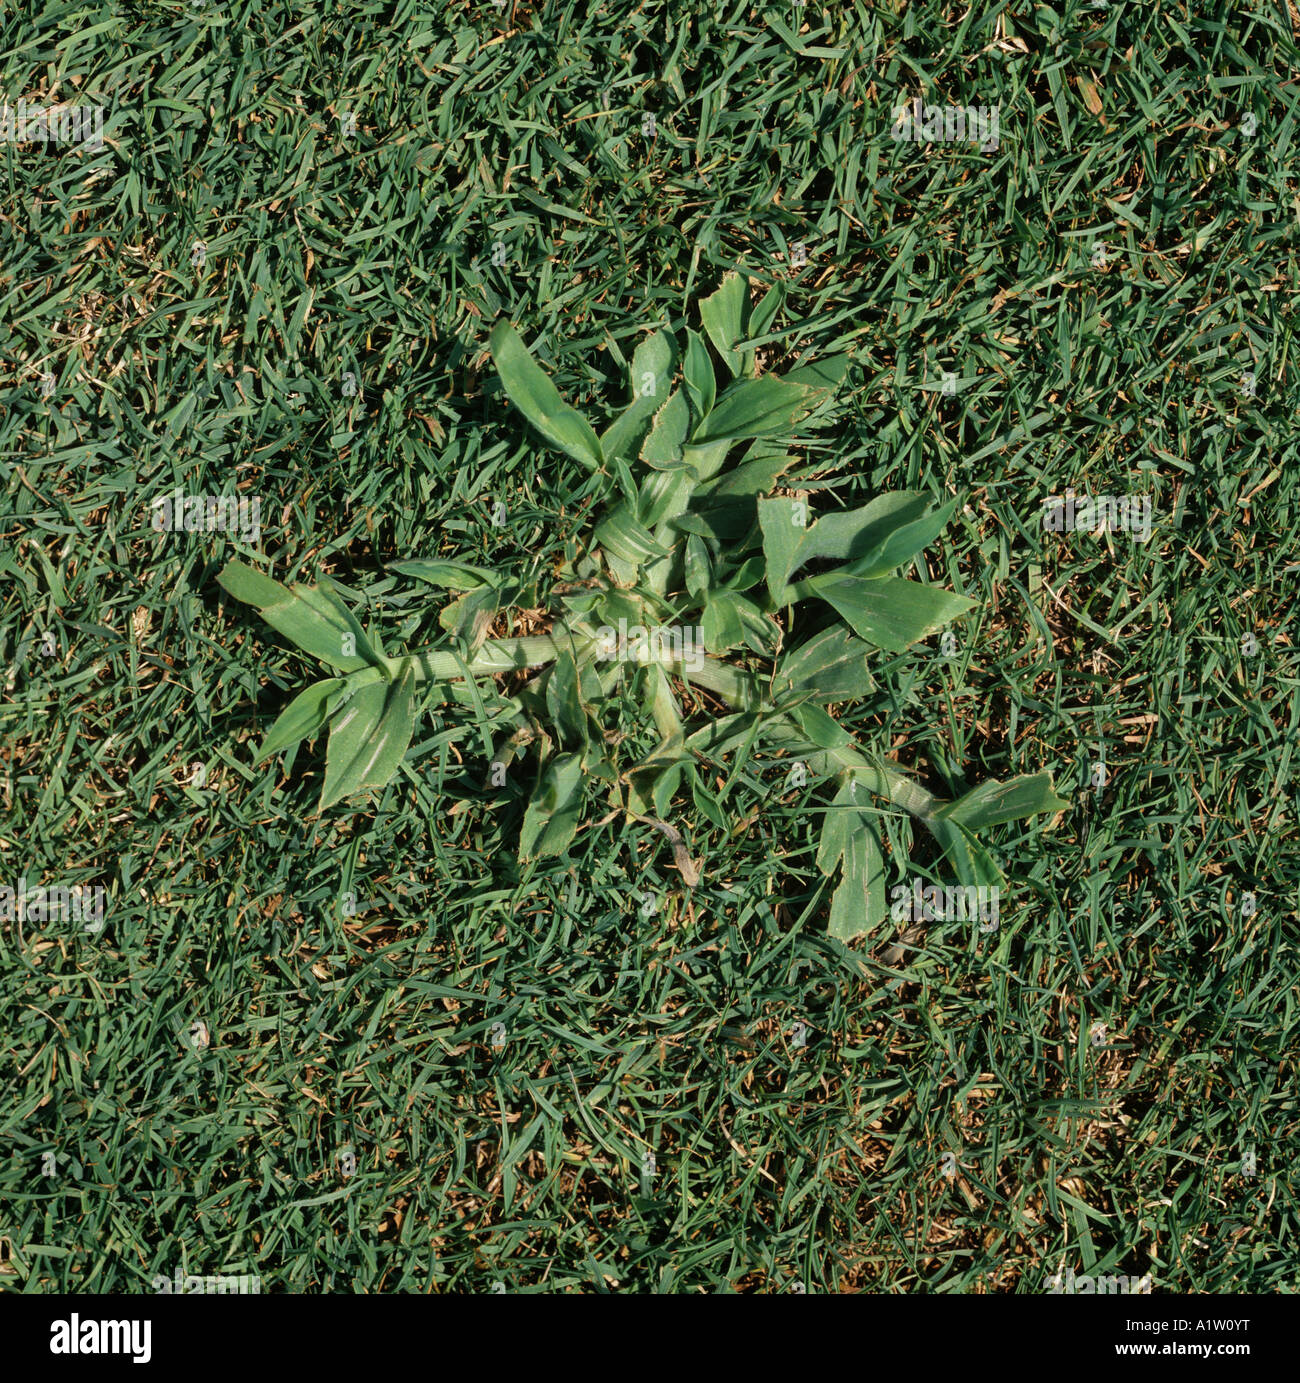 Crabgrass Digitaria sanguinalis a weed embedded in golf green bent turfgrass Agrostis sp Stock Photo